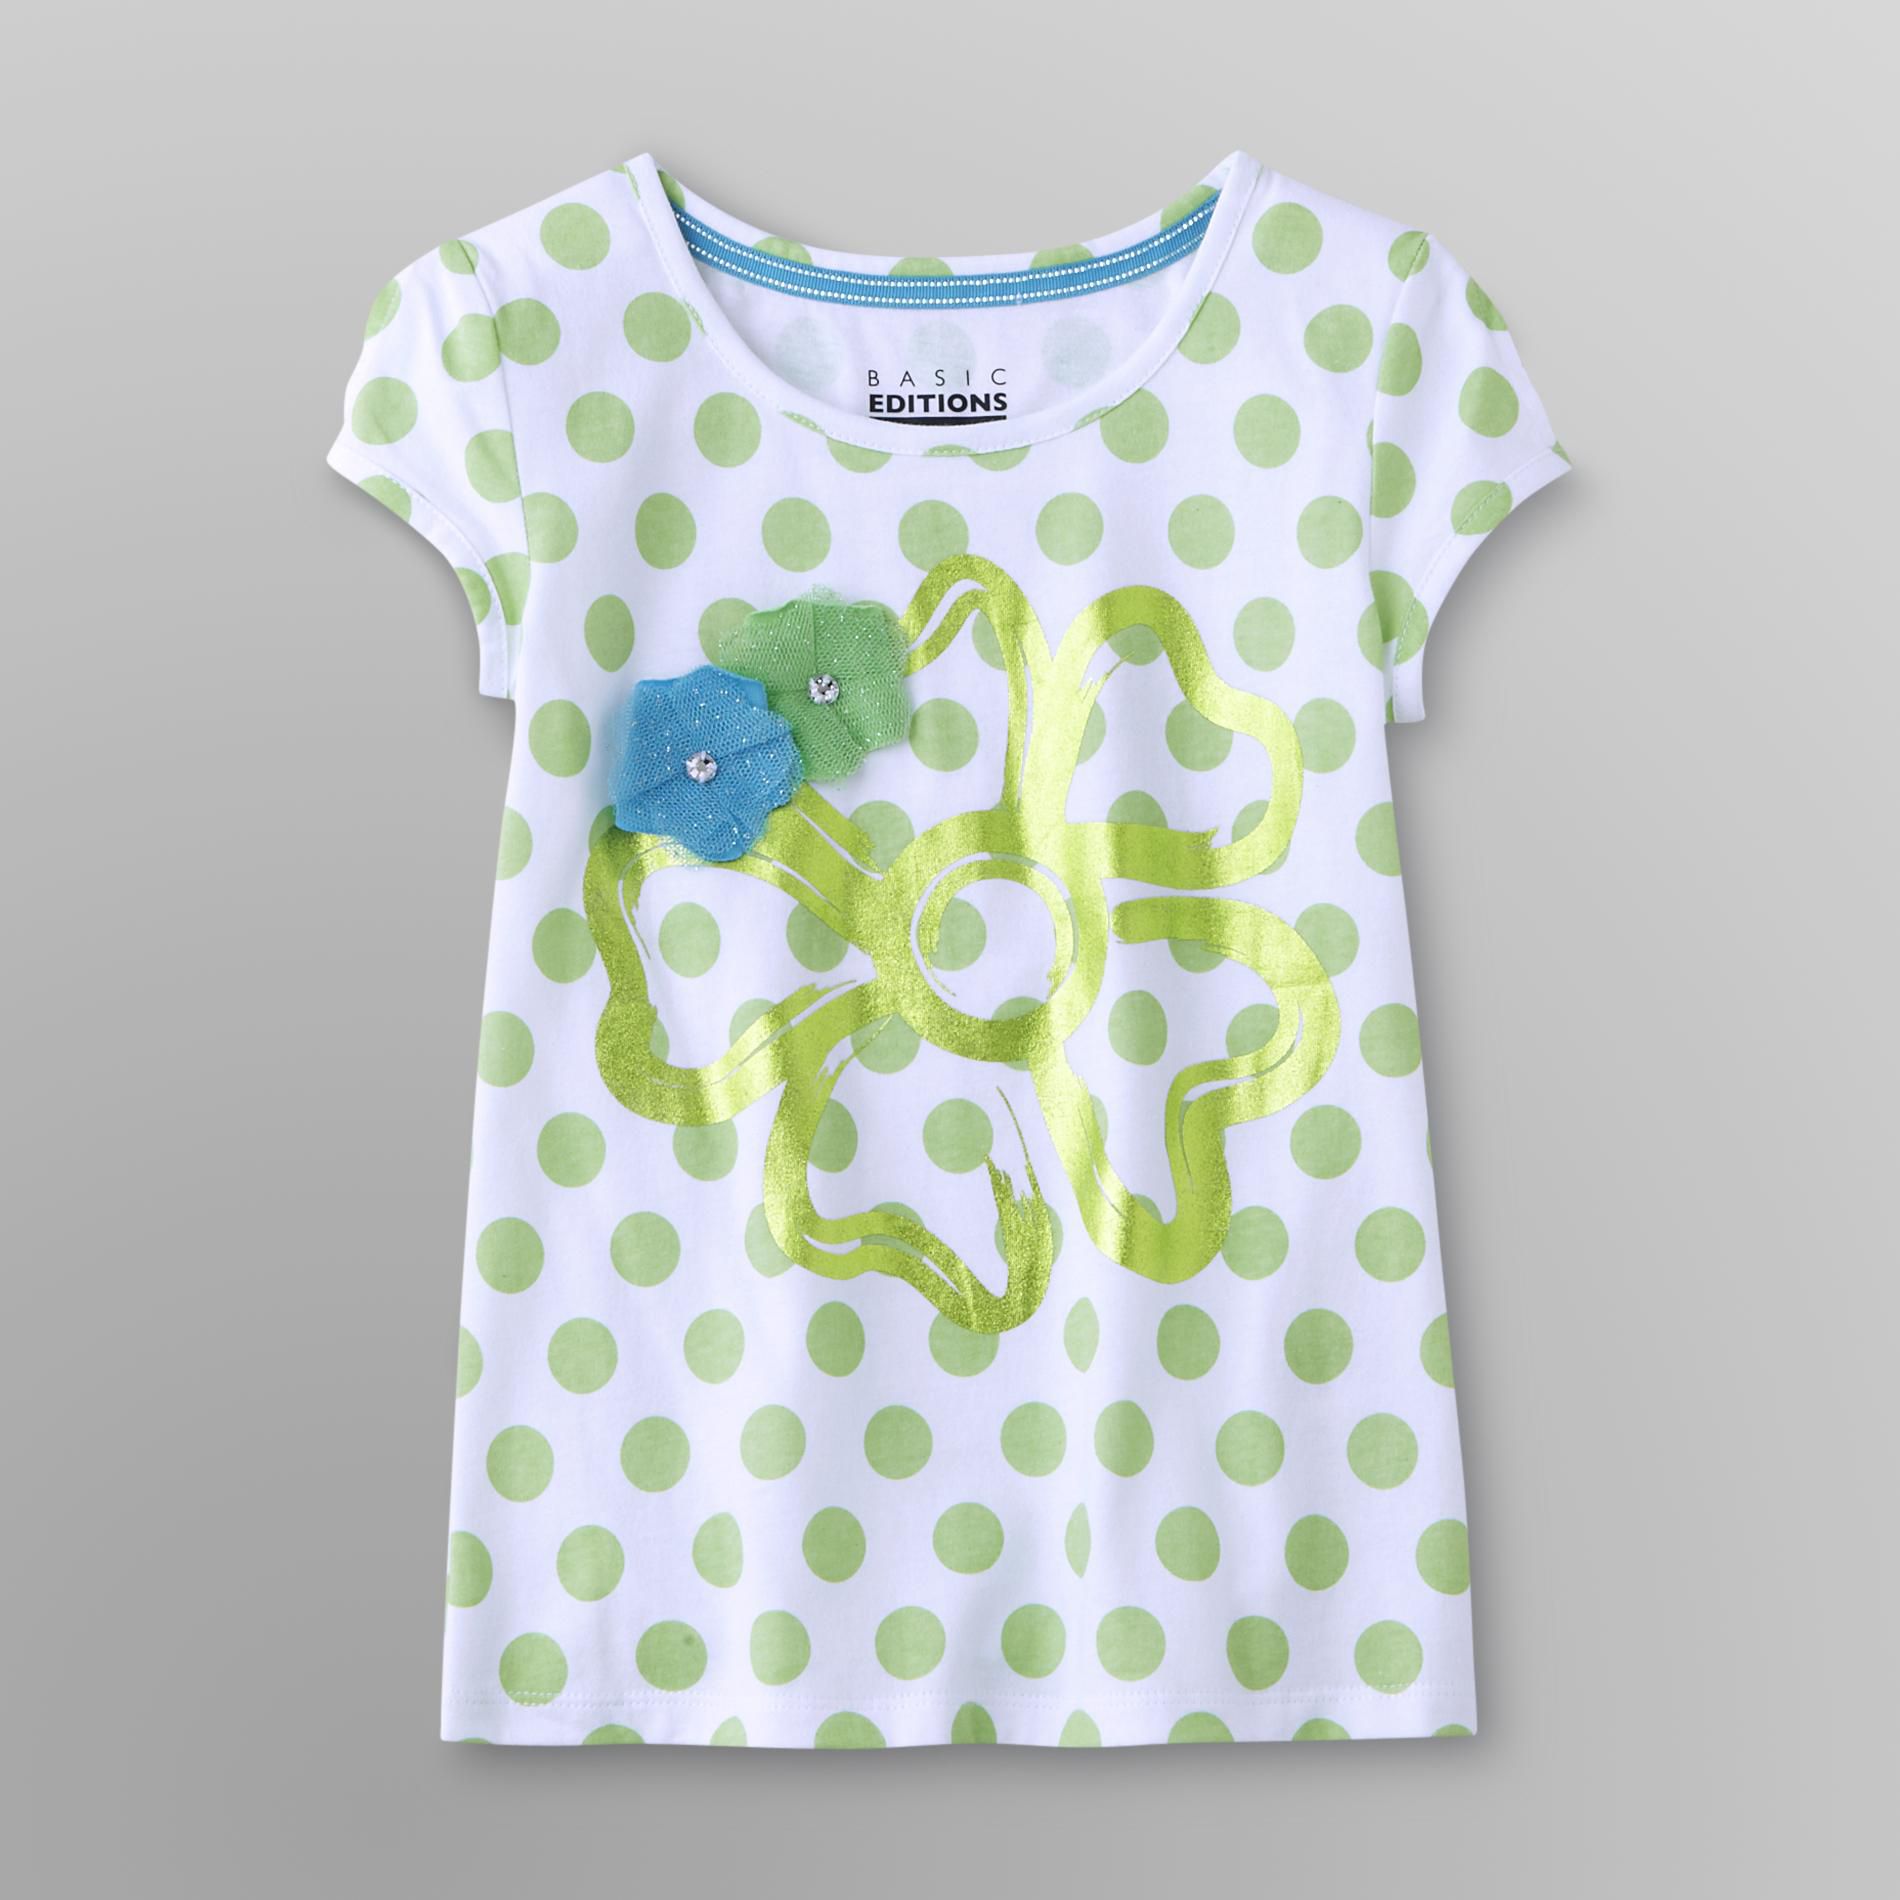 Basic Editions Girl's T-Shirt - Polka Dot